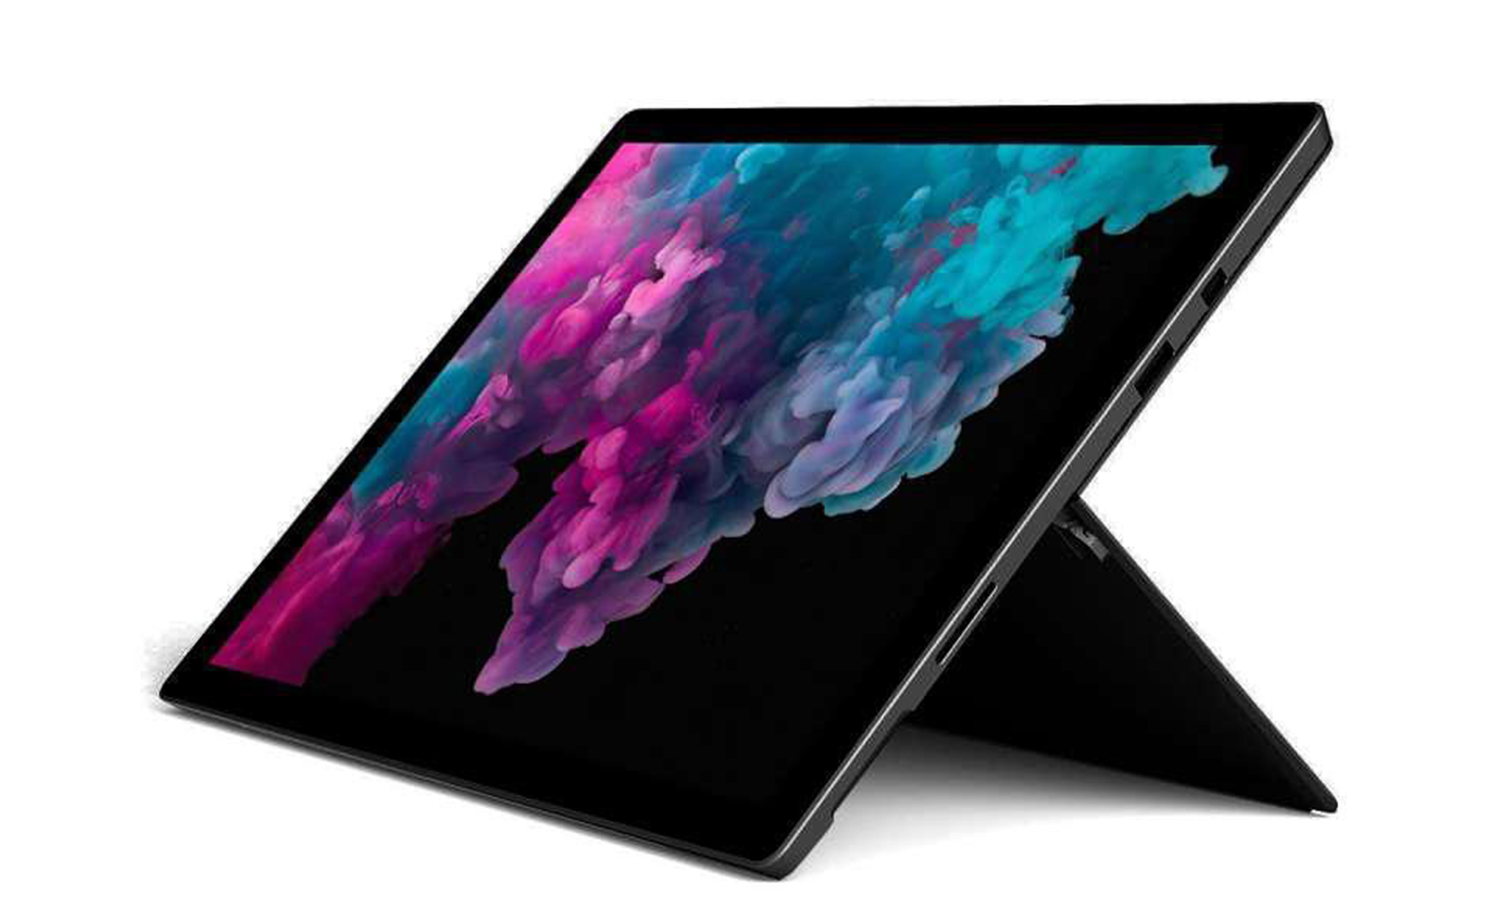 Microsoft Surface Pro 6 Intel Core i5 8th Gen 8GB RAM 256GB SSD Touchscreen Windows 10 Home